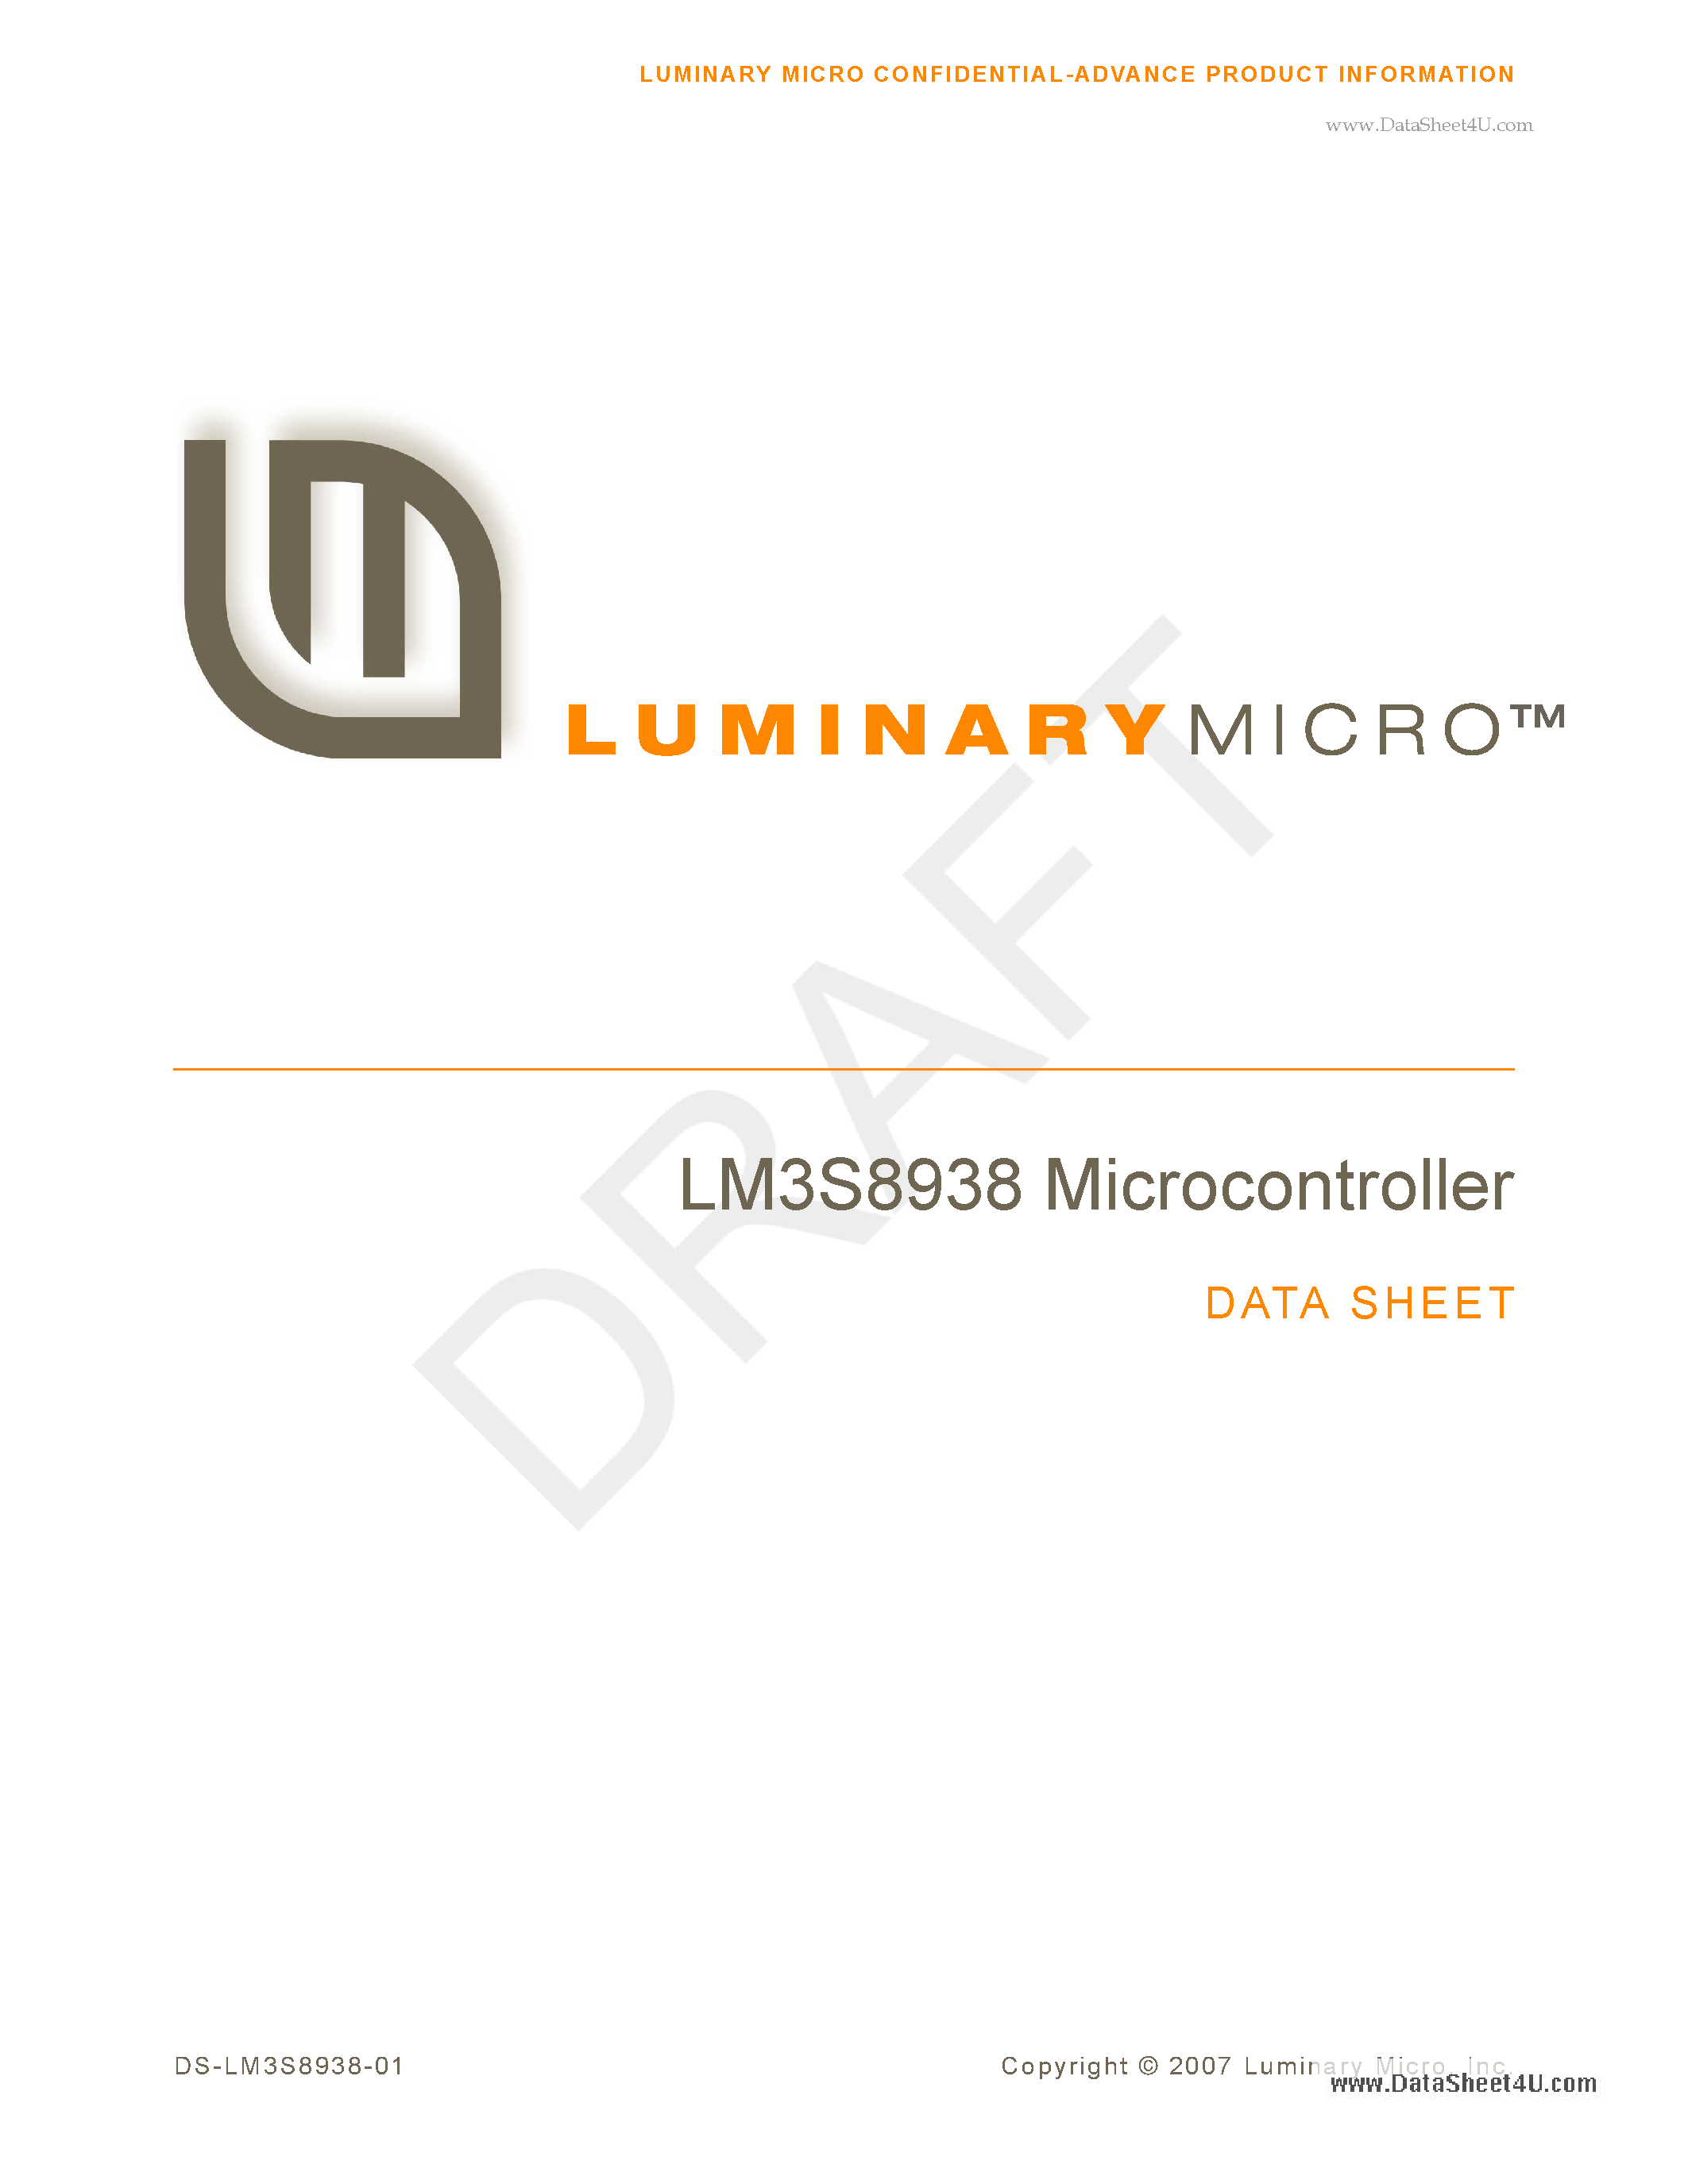 Даташит LM3S8938 - Microcontroller страница 1